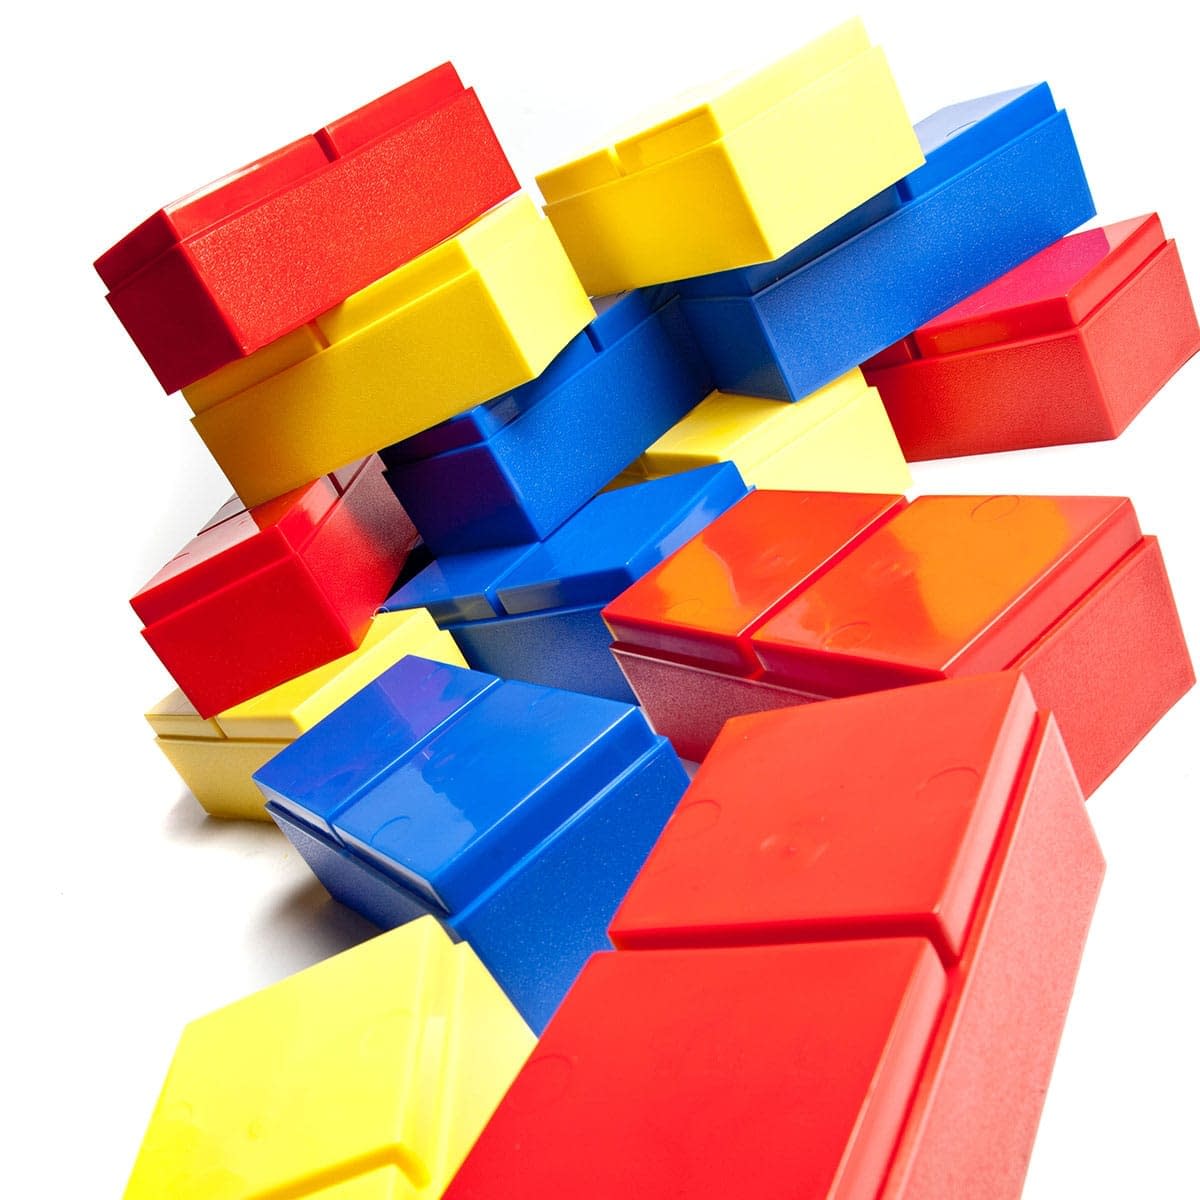 large blocks for kids